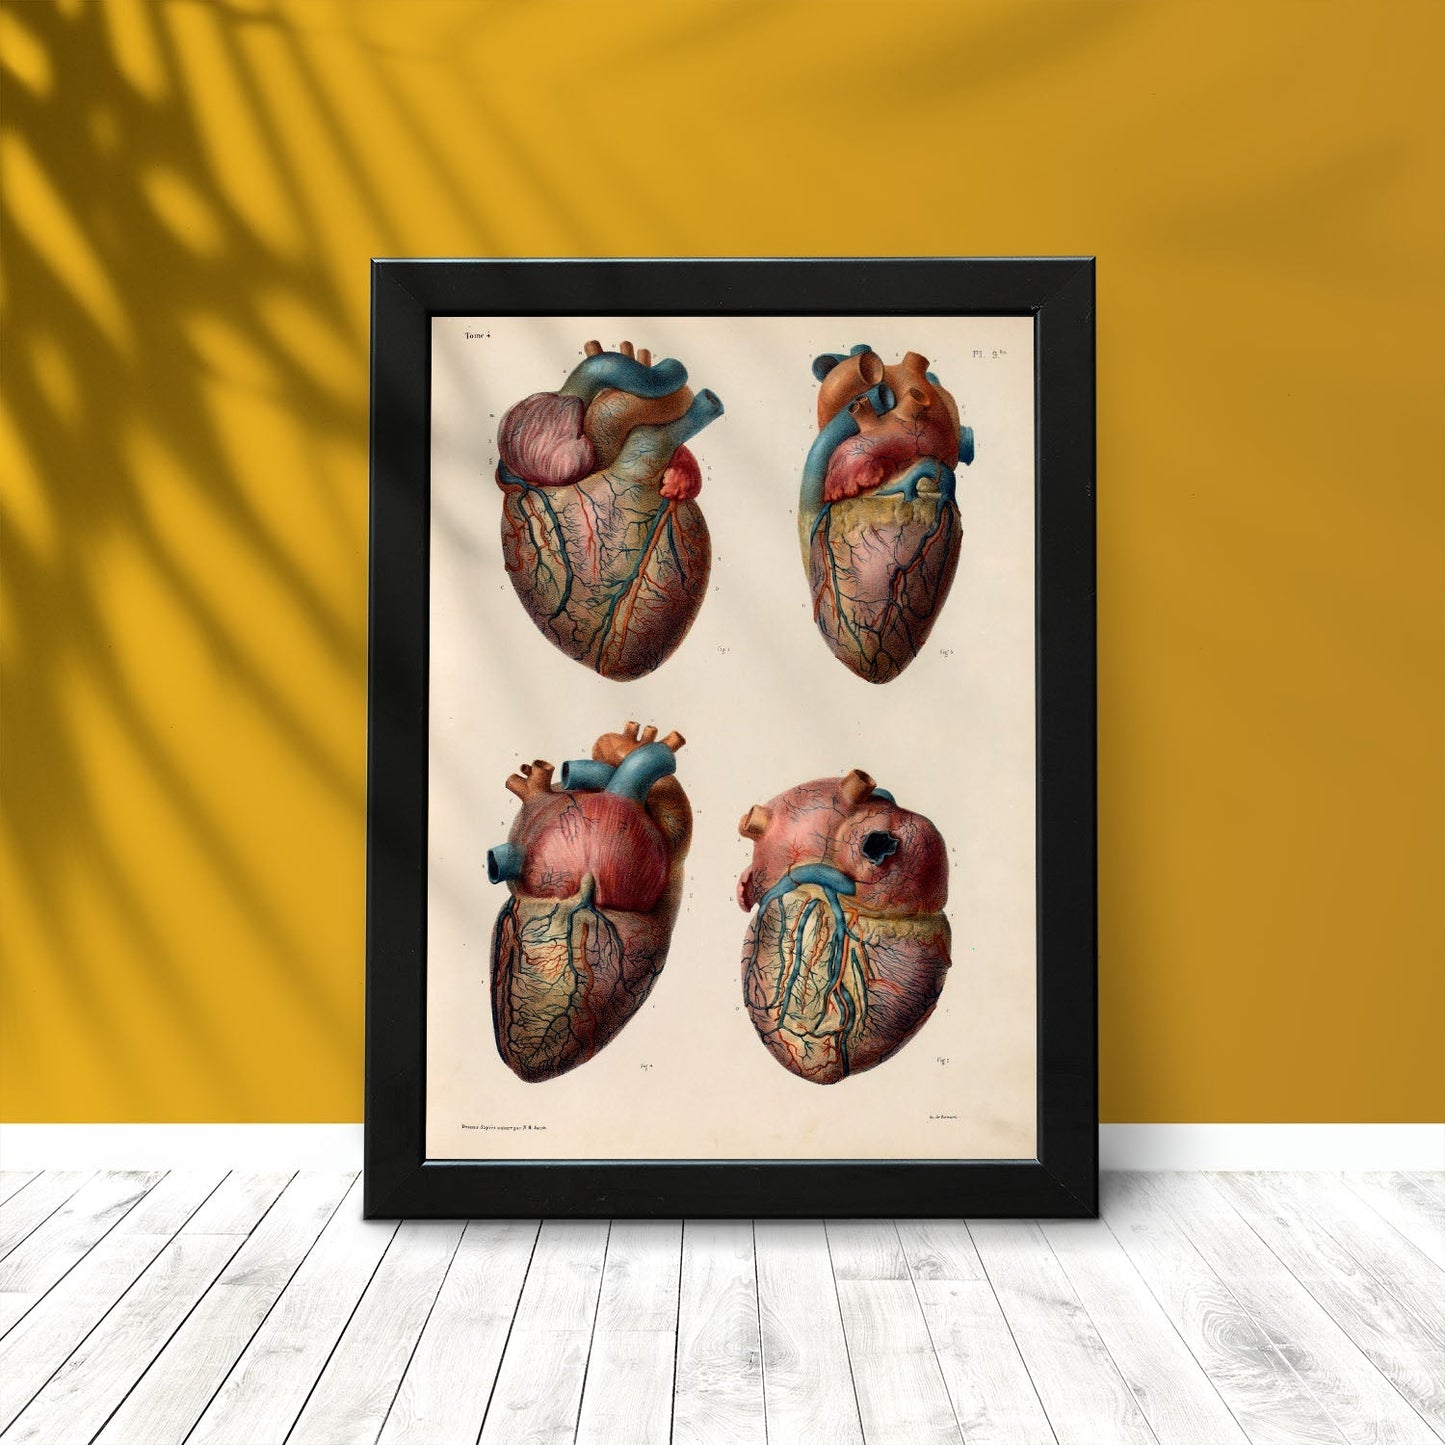 Heart and coronary arteries and veins-Artwork-Nacnic-Nacnic Estudio SL